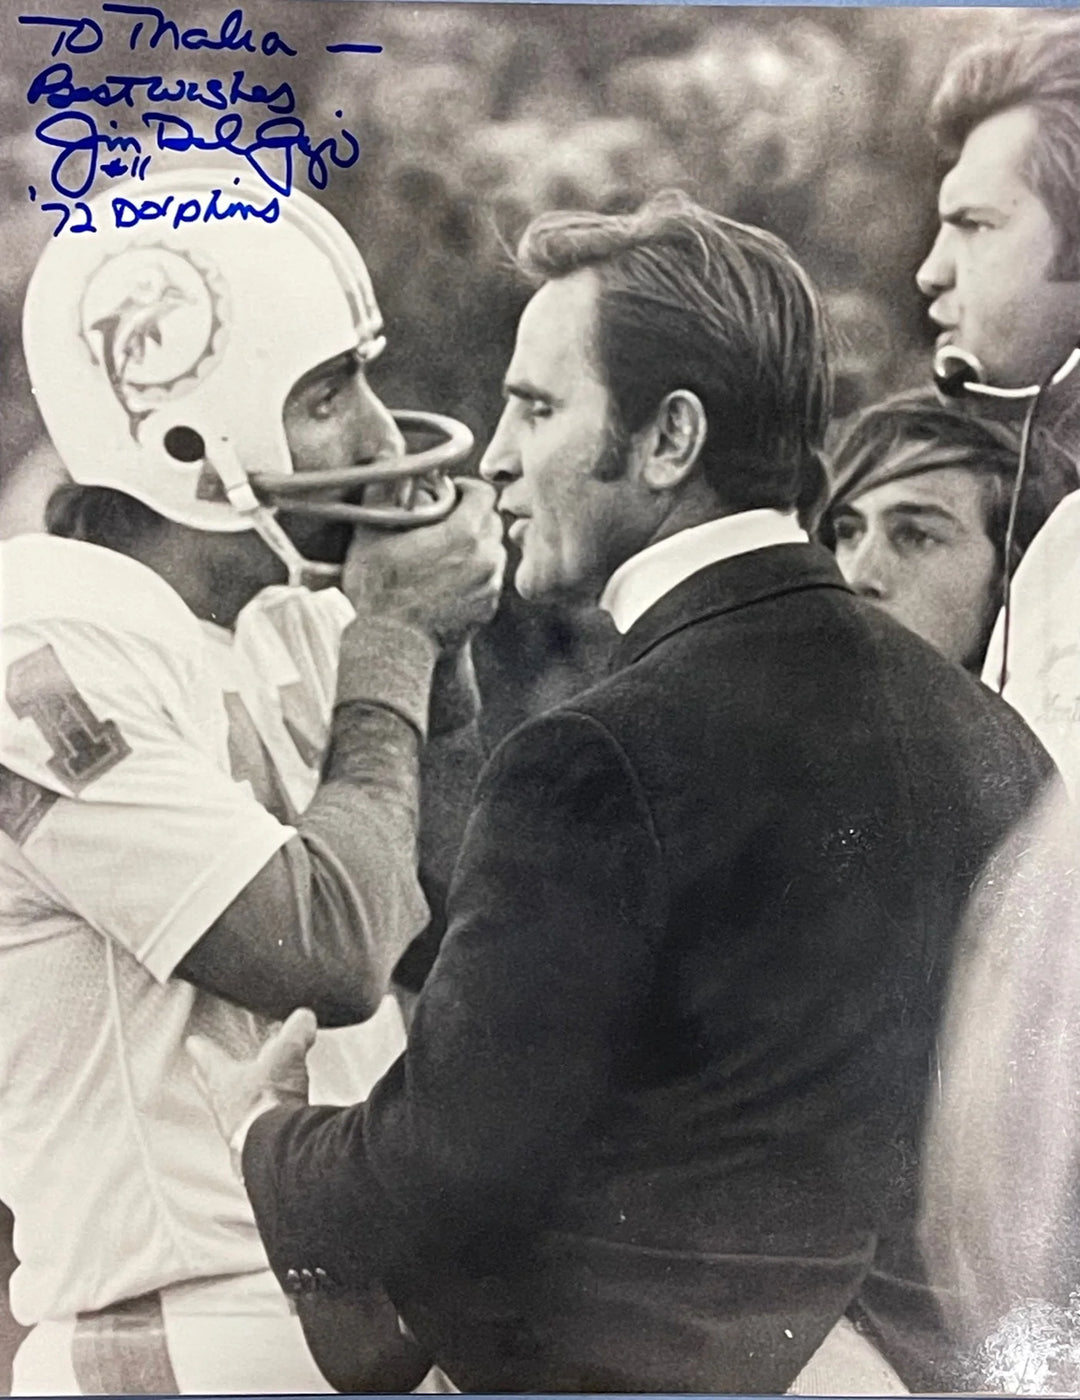 Jim Del Gaizo Autographed 8x10 Football Photo Image 1